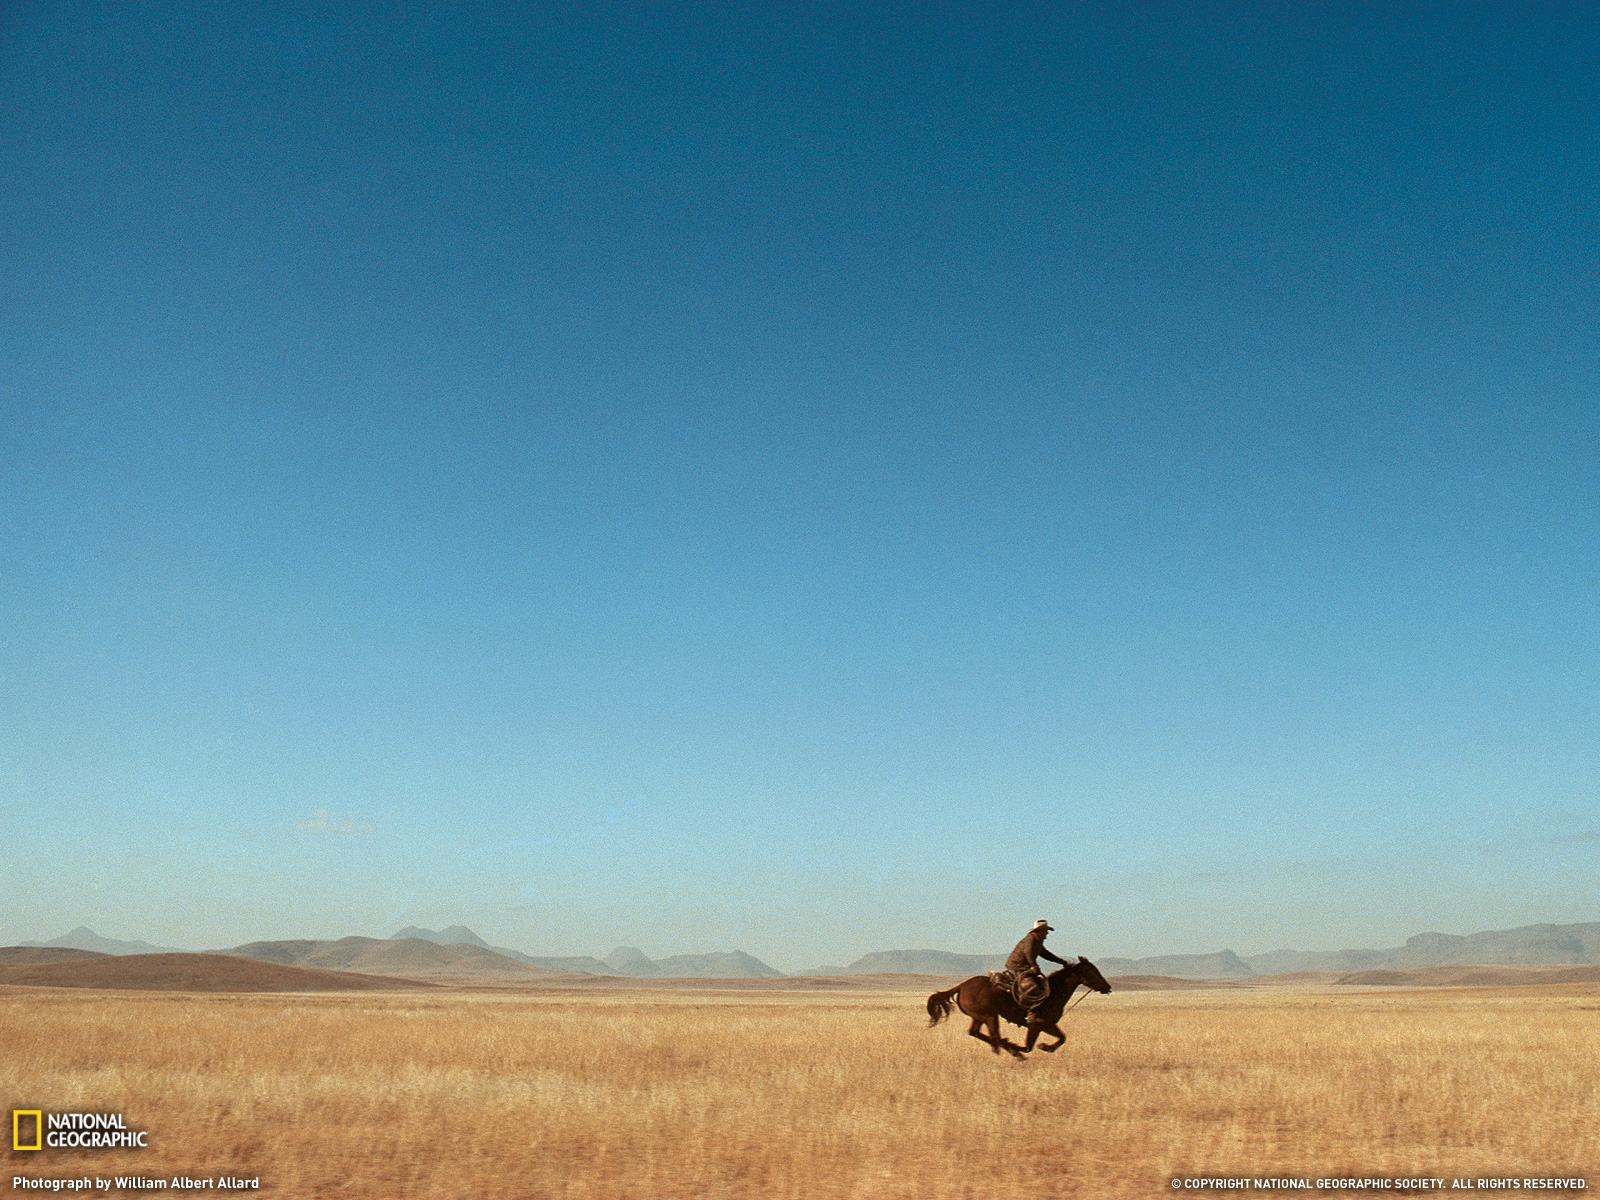 Image West Texas Cowboy Photo Landscape Wallpaper National Geographic